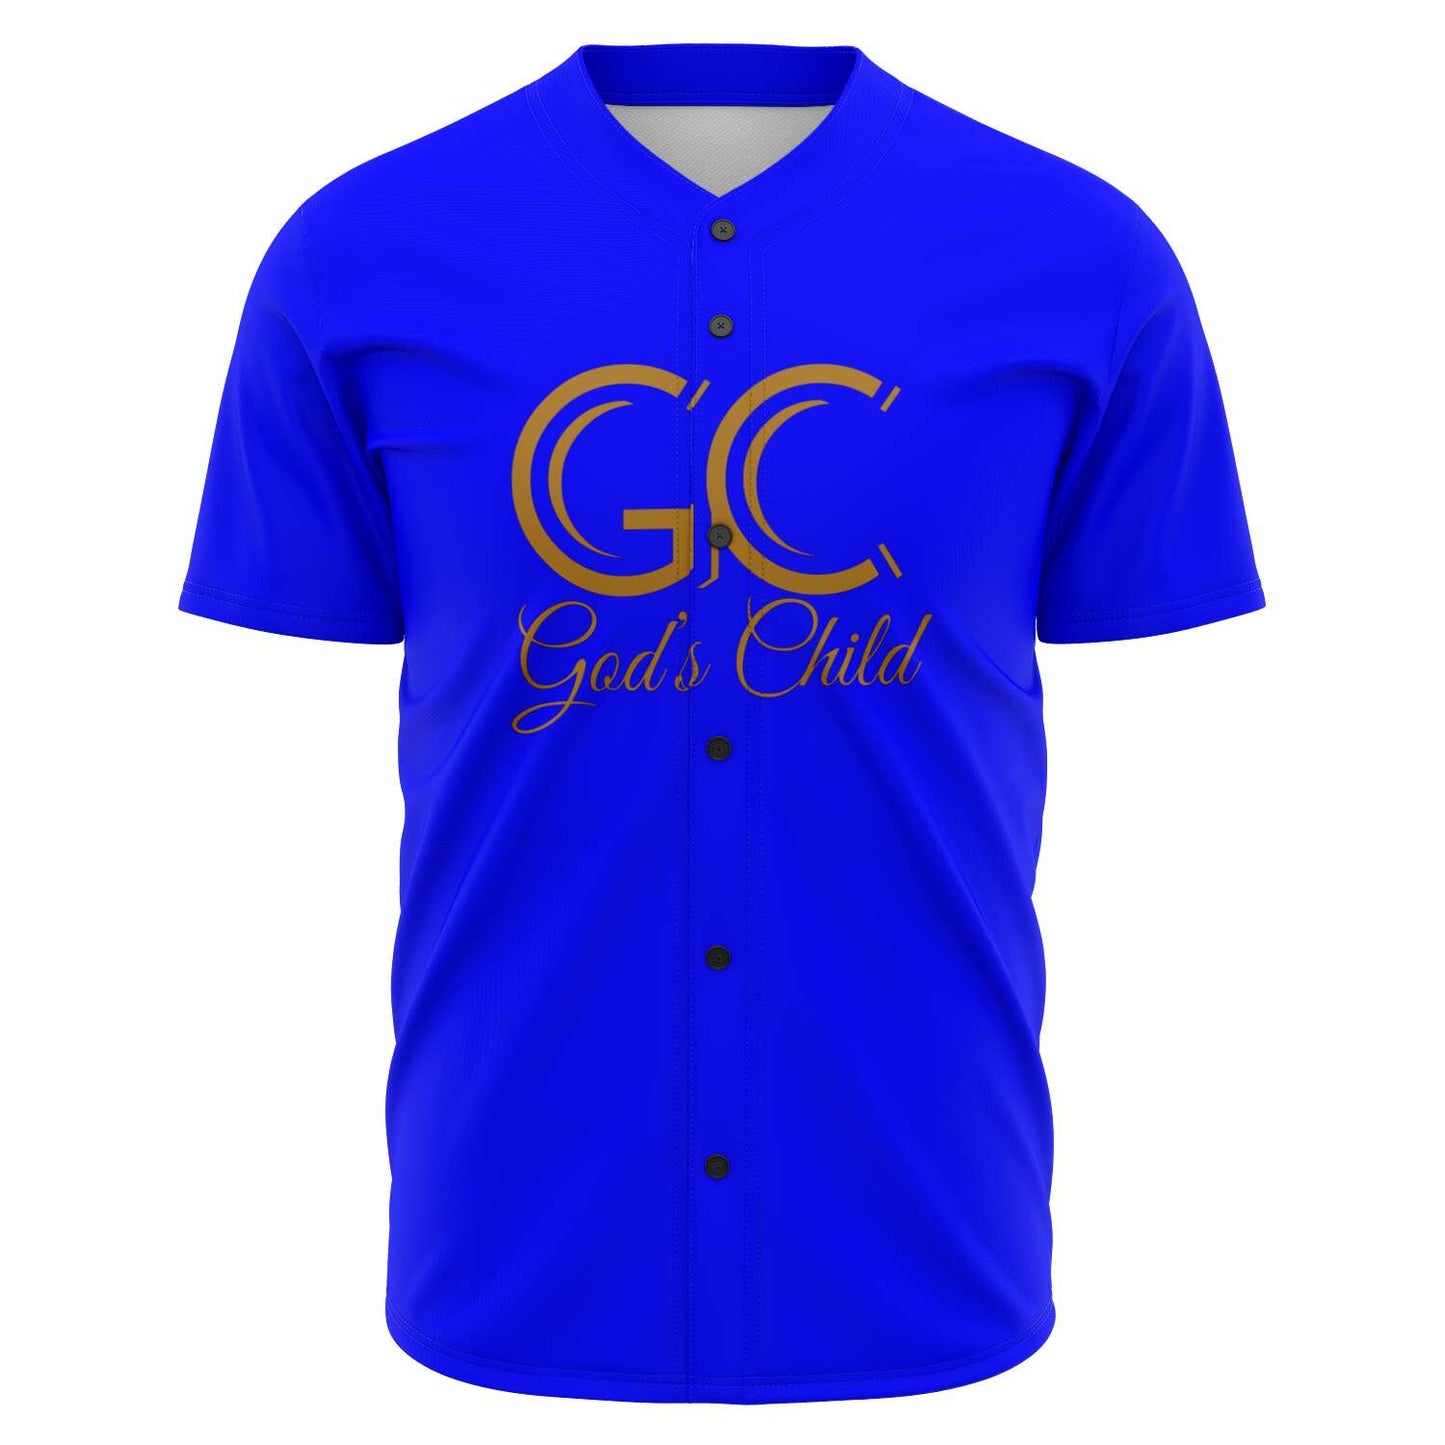 God's Child Baseball Jersey - Moroccan Blue